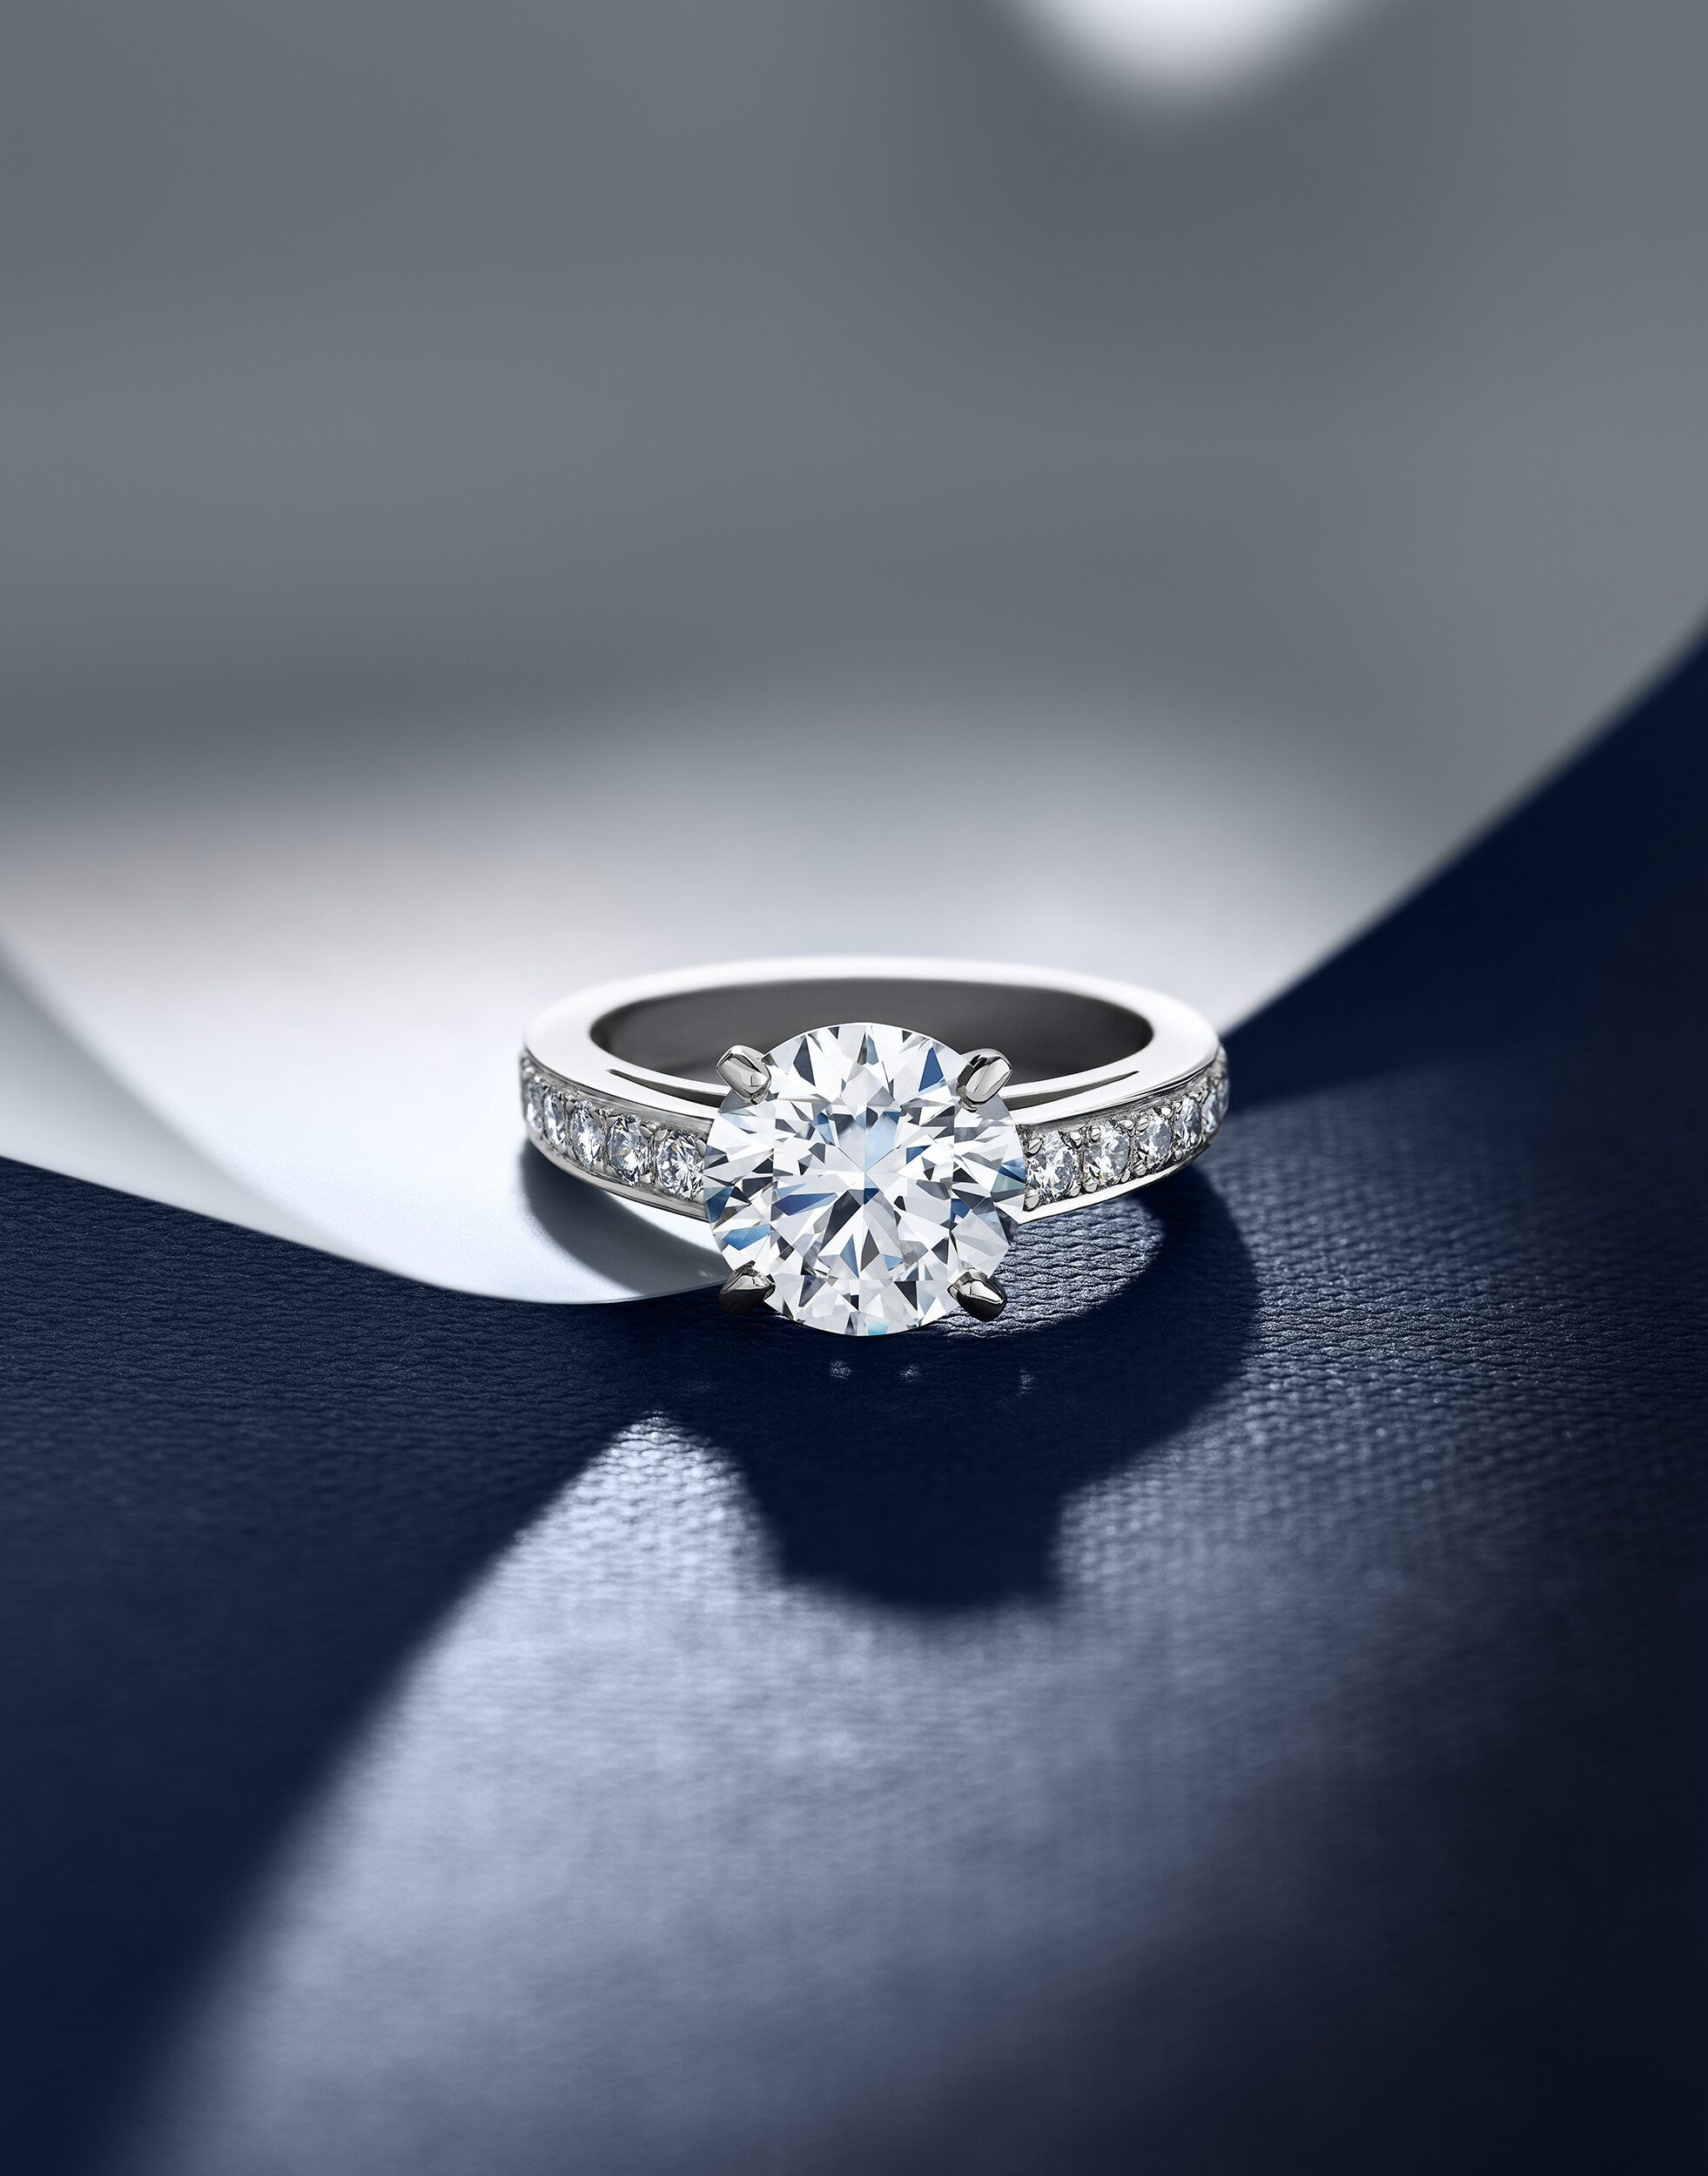  Diamond engaement ring shot for De Beers 